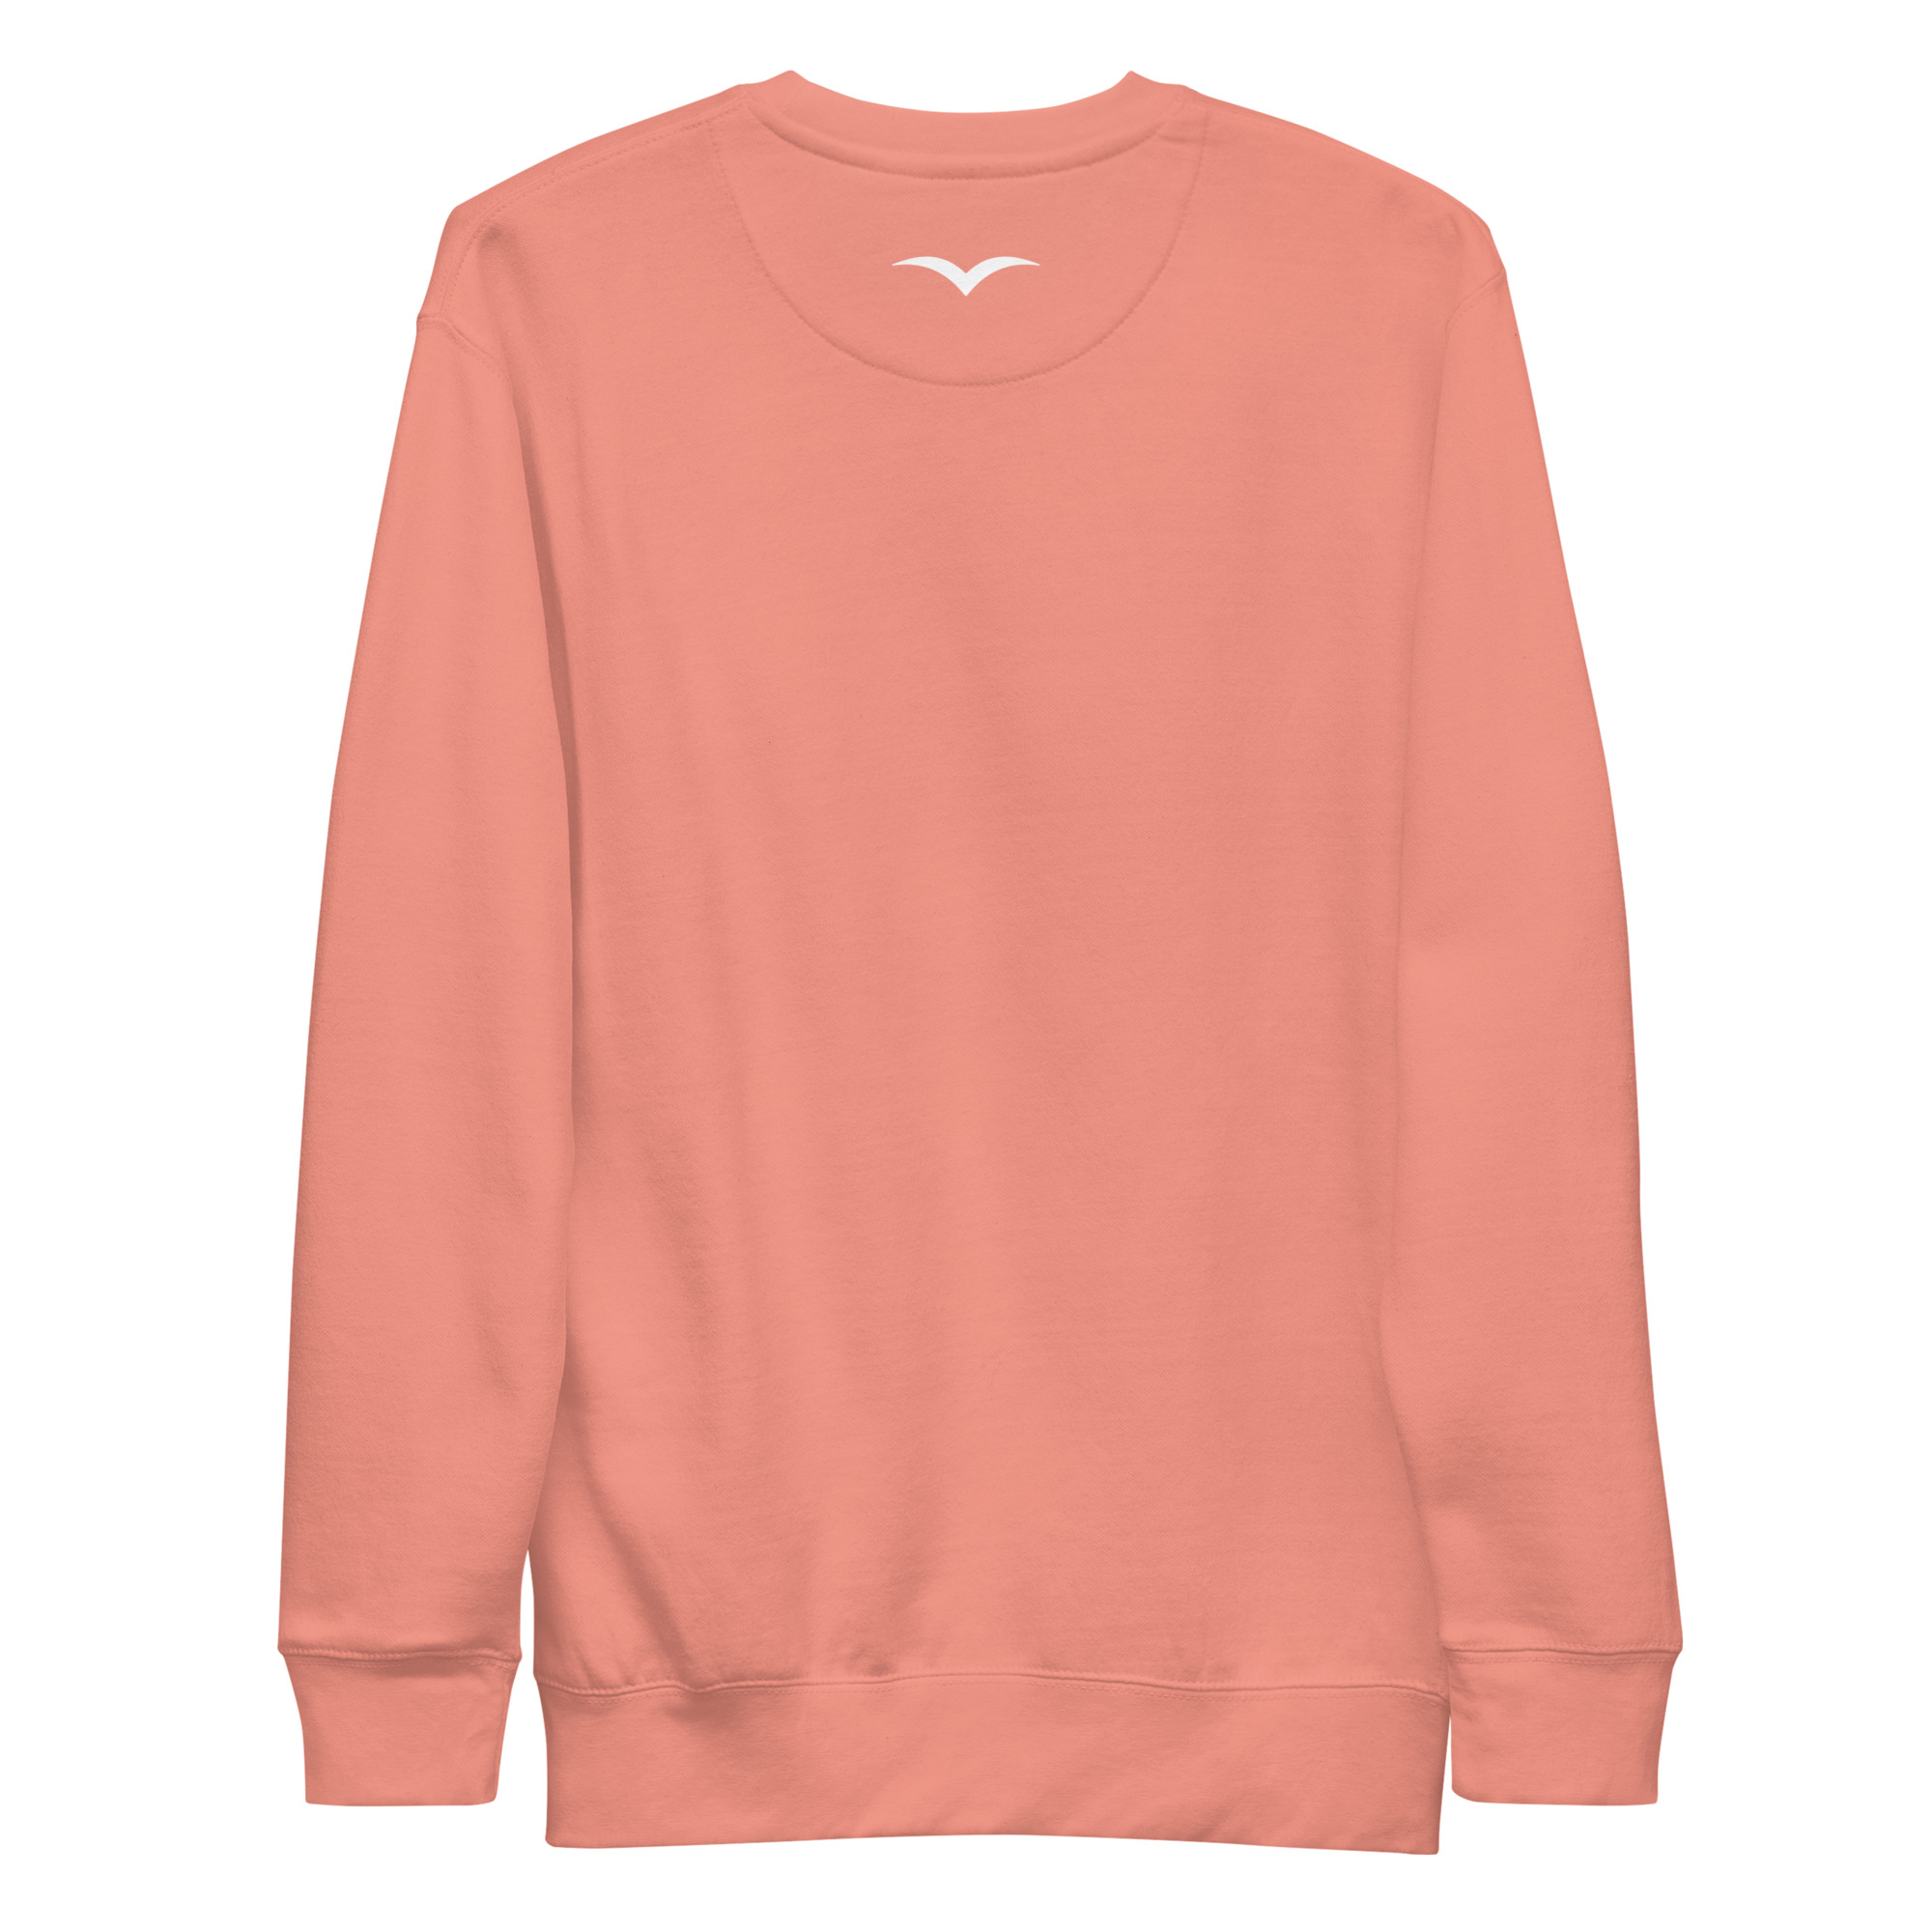 unisex-premium-sweatshirt-dusty-rose-back-64136cee69e5b.jpg